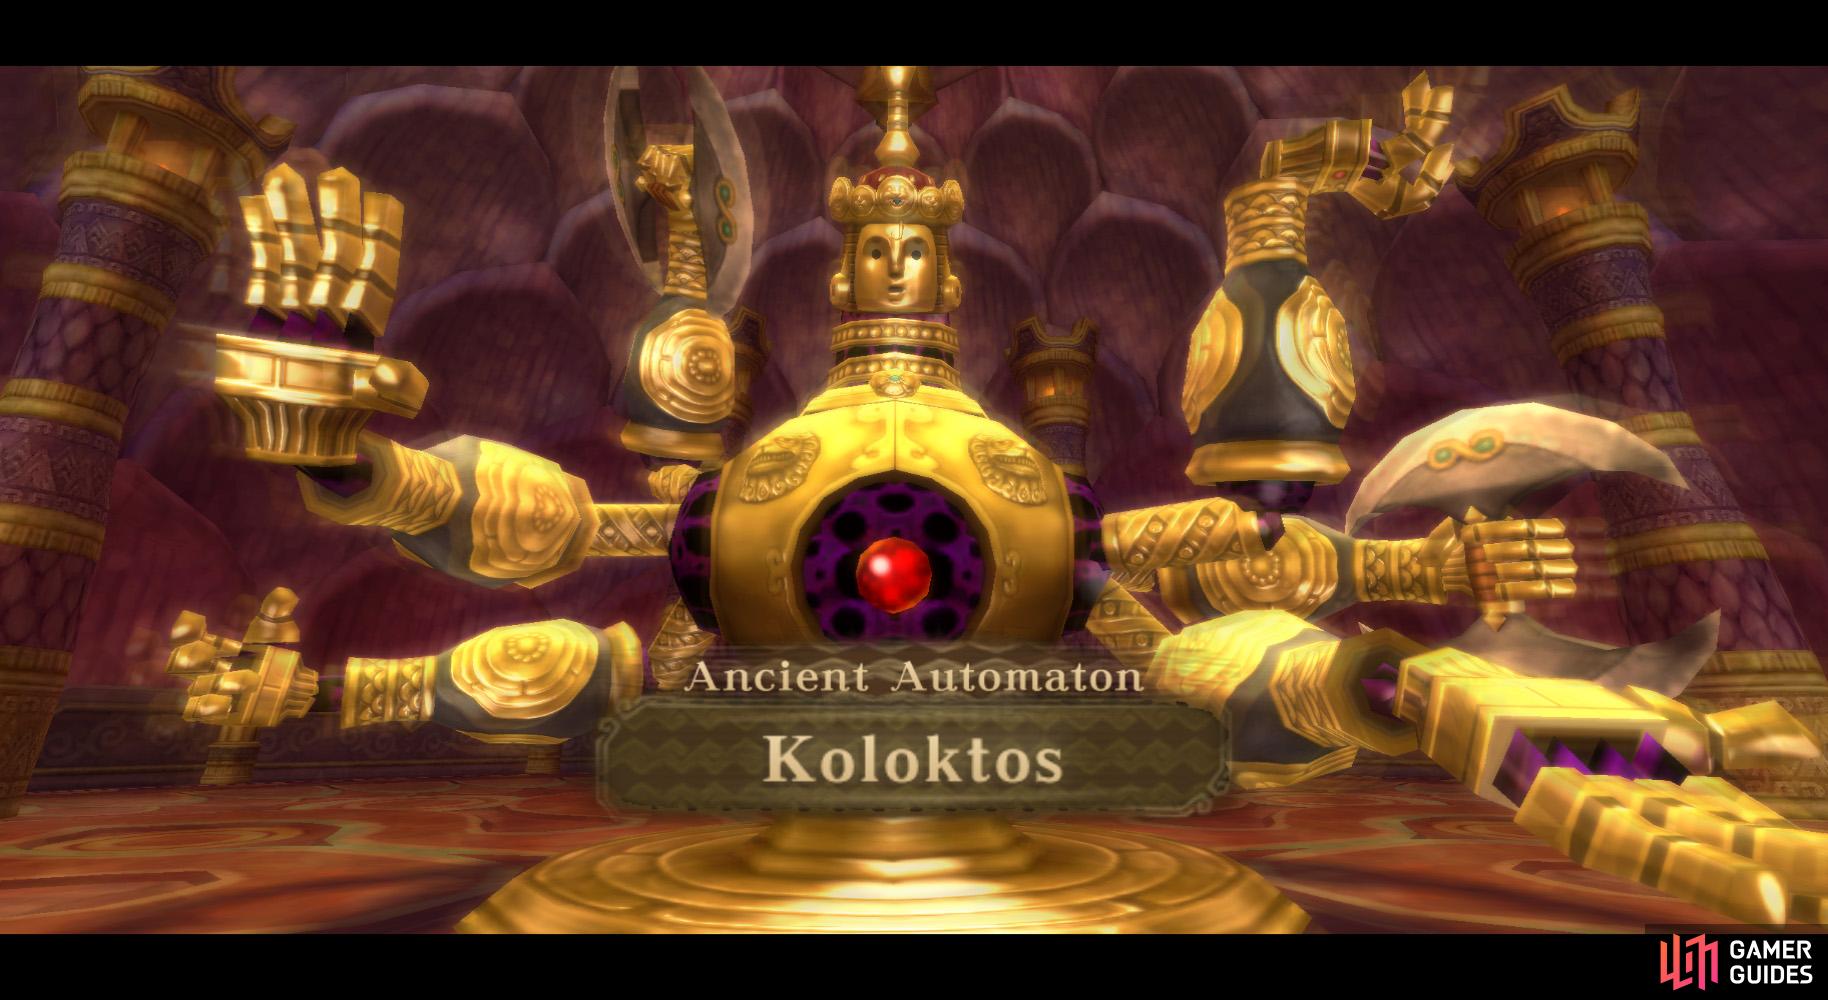 Koloktos has 6 arms–and isnt afraid to use em!